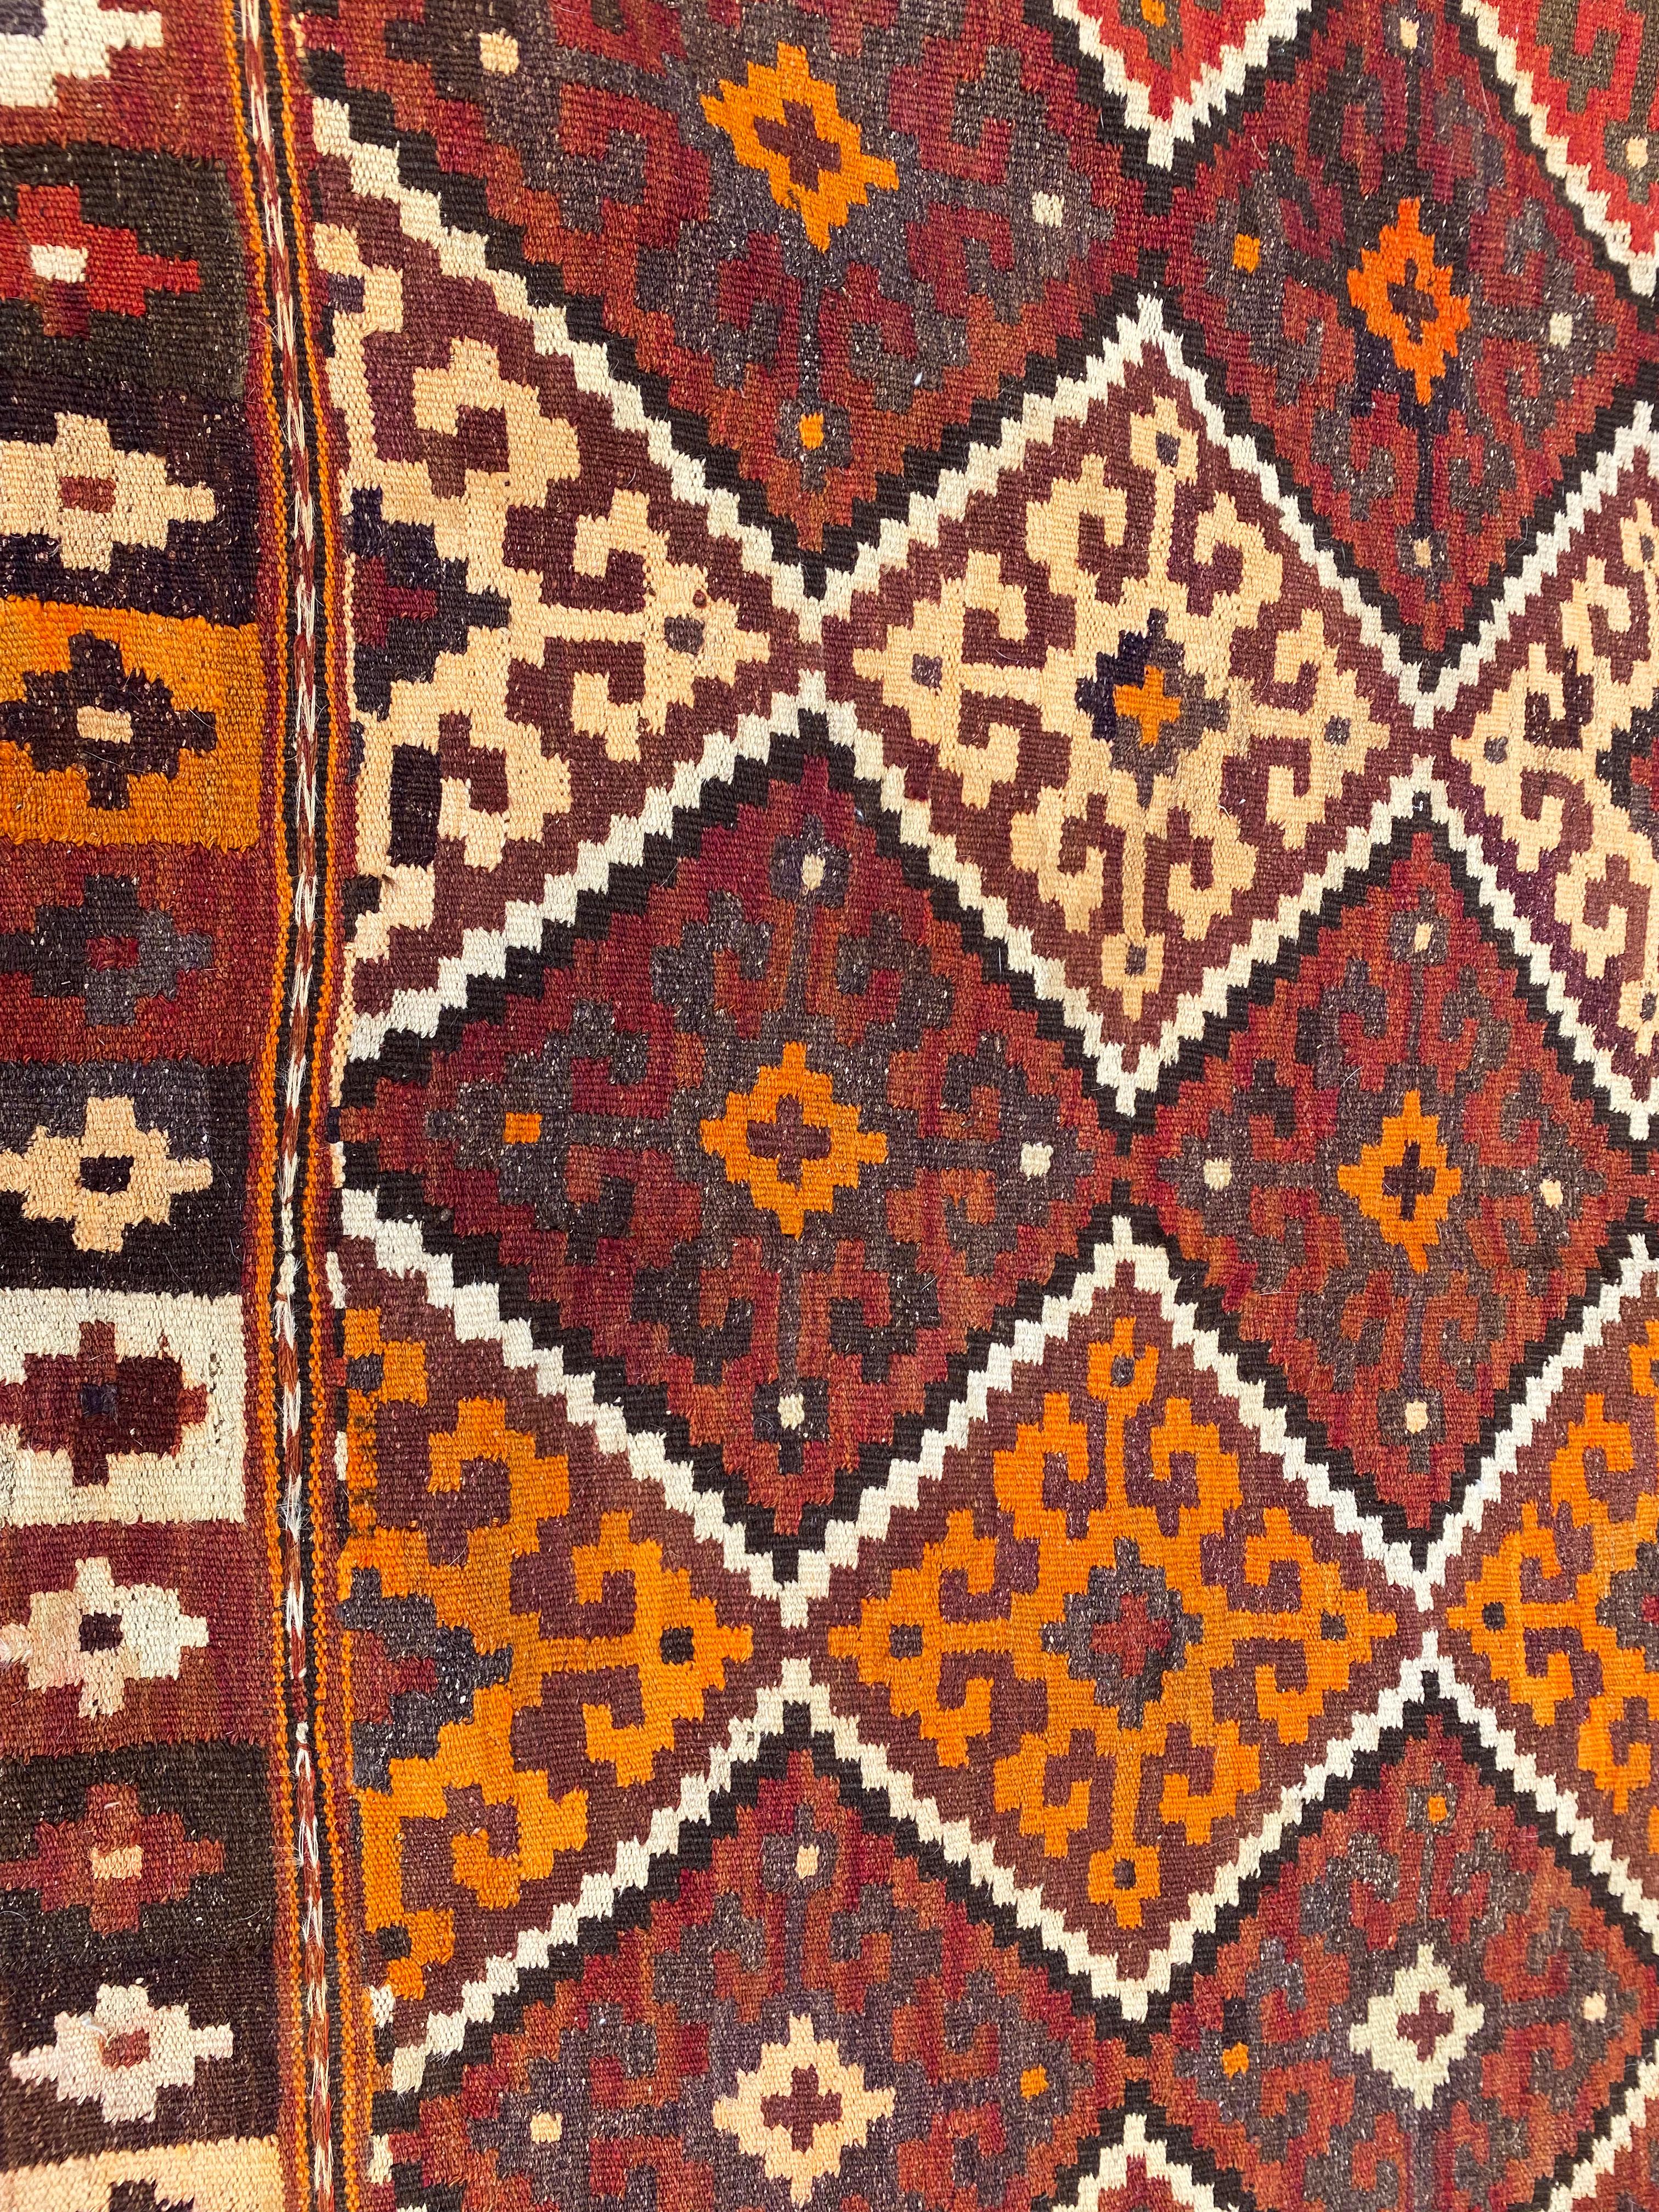 Hand-Crafted Uzbekistan Tartari Ranghi Kilim Rug from Wool, Early 20th Century For Sale